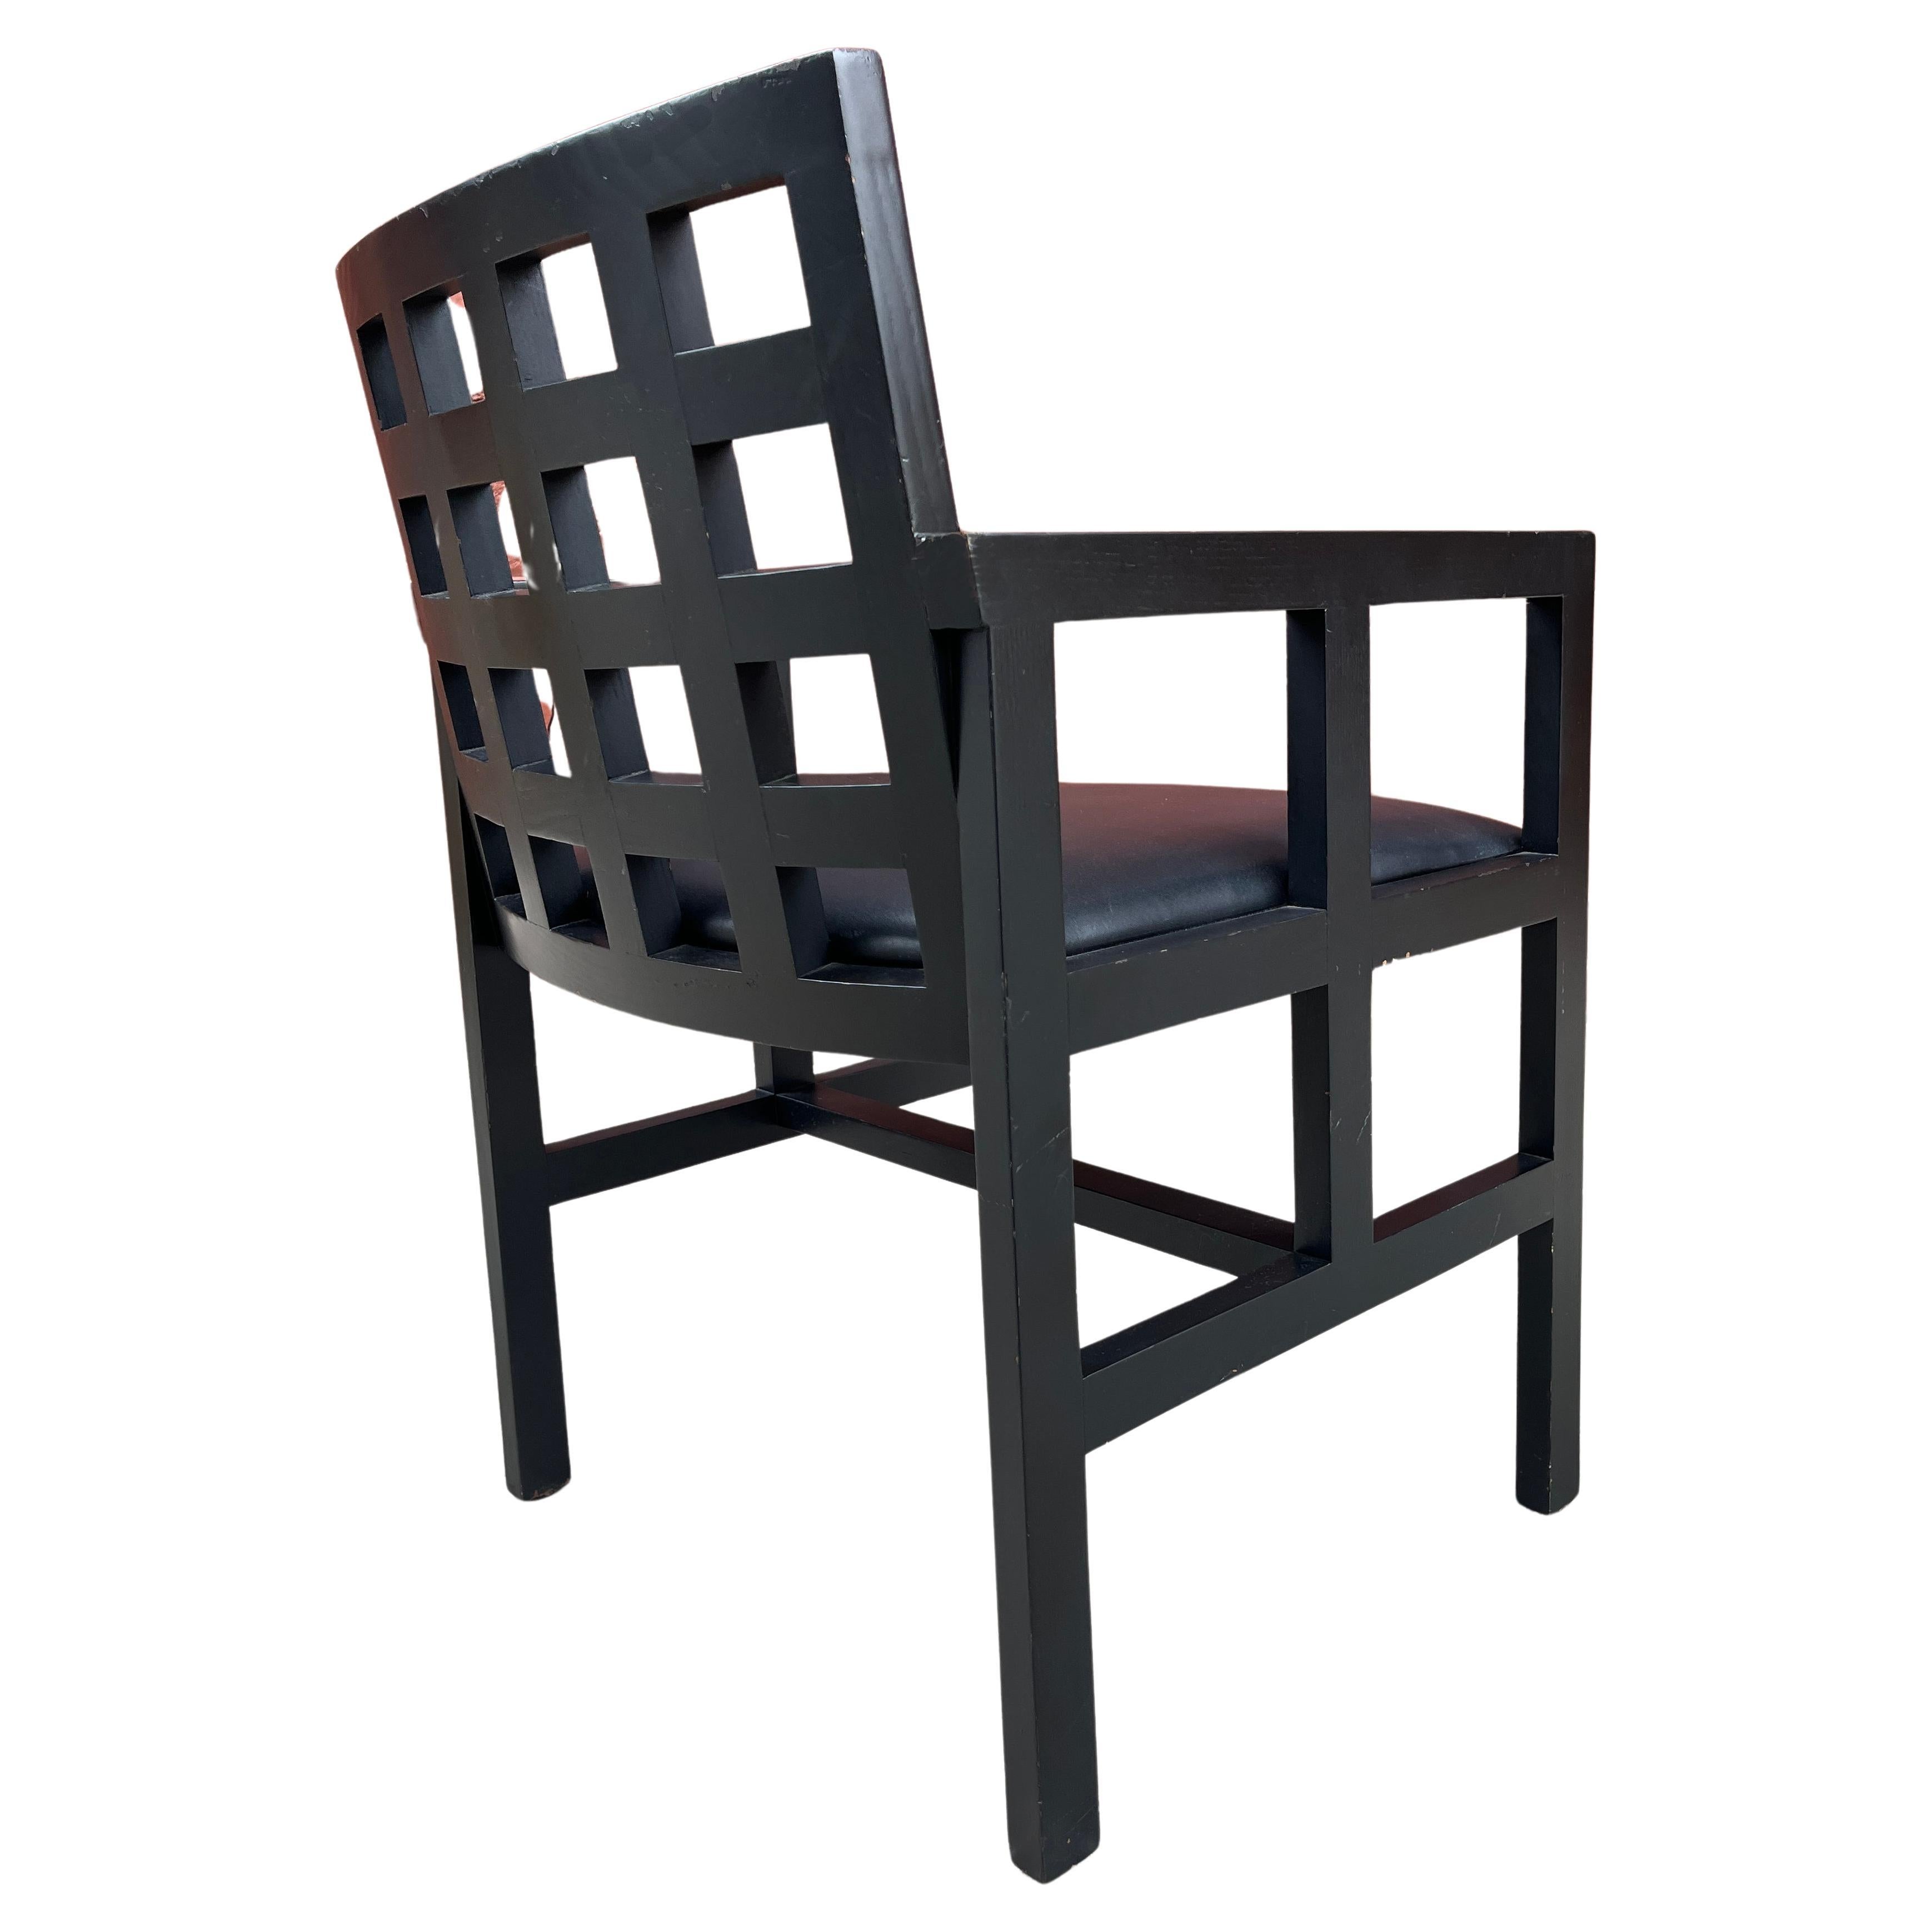 Beech Midcentury Modern Ward Bennett Model 1515 Chair For Sale